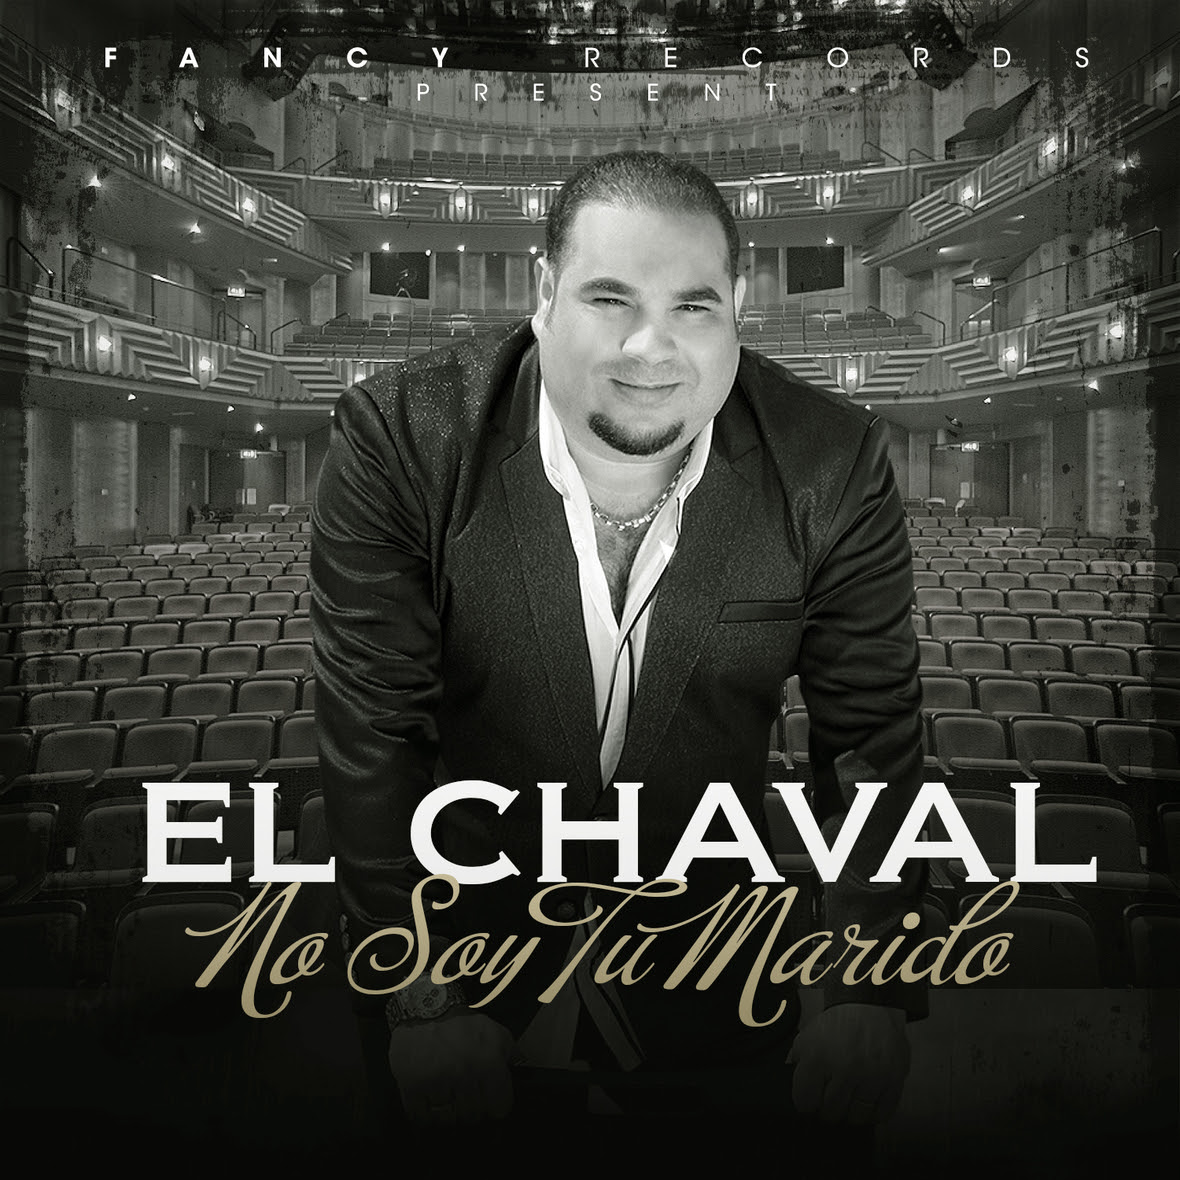 NO SOY TU MARIDO  cd Cover  EL CHAVAL